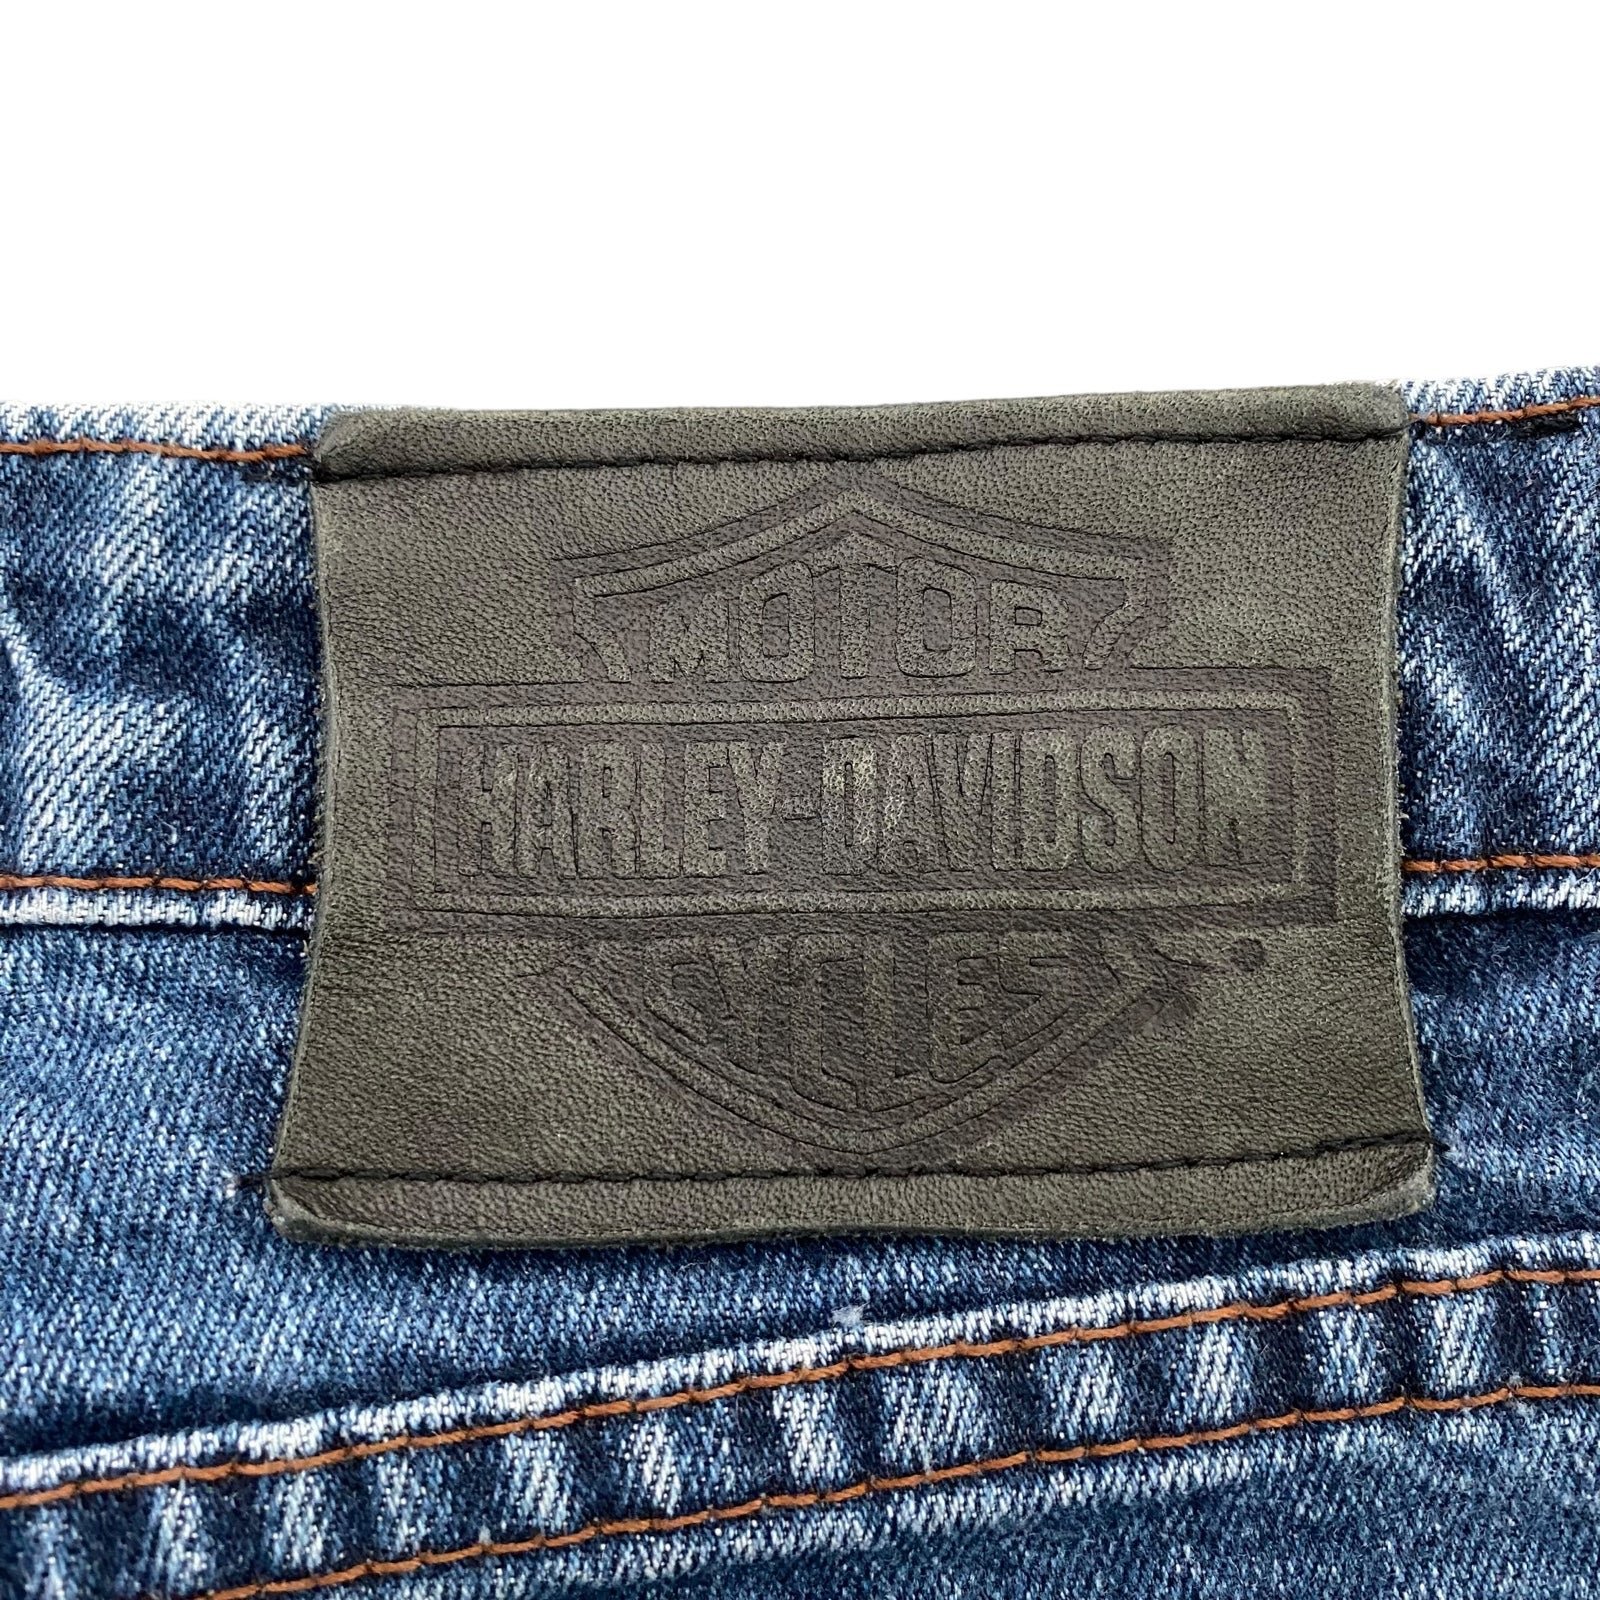 Amazing Harley Davidson Bootcut Jeans Women 14 / 34 x 31 Blue Medium Wash Mid Rise Biker fRPrHxnvY Hot Sale